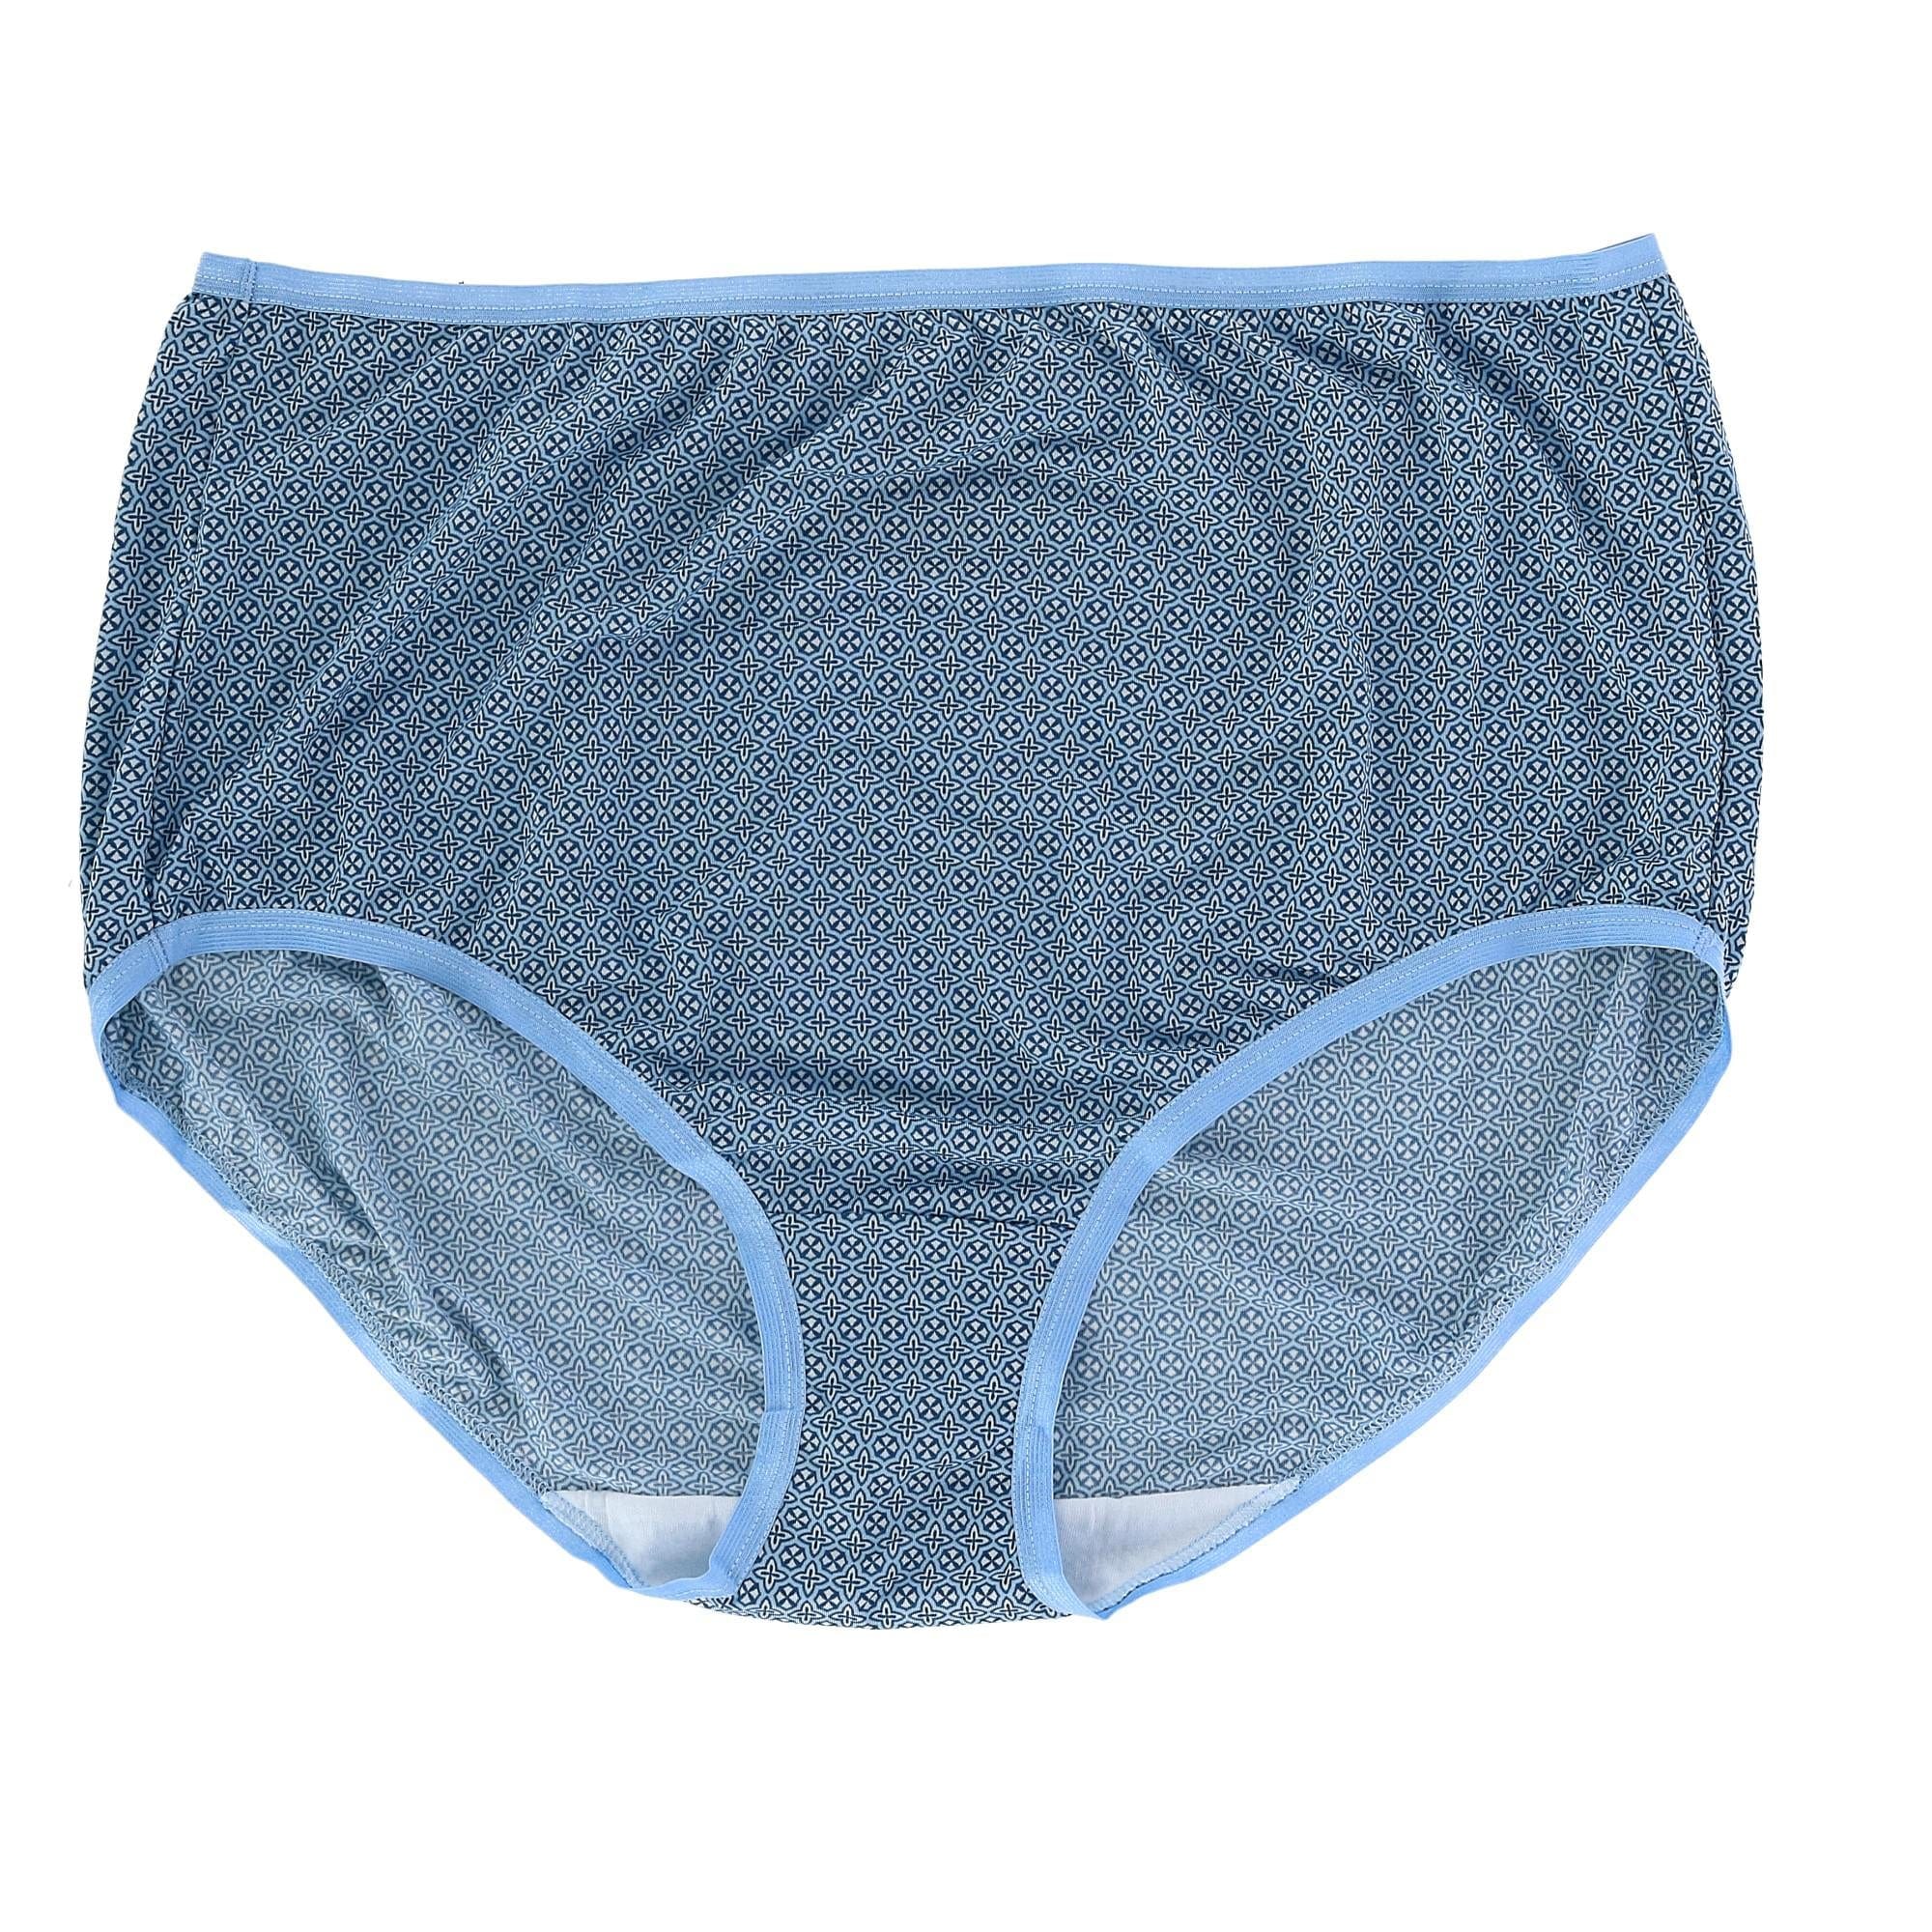 Fruit of the Loom Women's 5 Pack Microfiber Brief Panties, Assorted, 7 at   Women's Clothing store: Briefs Underwear